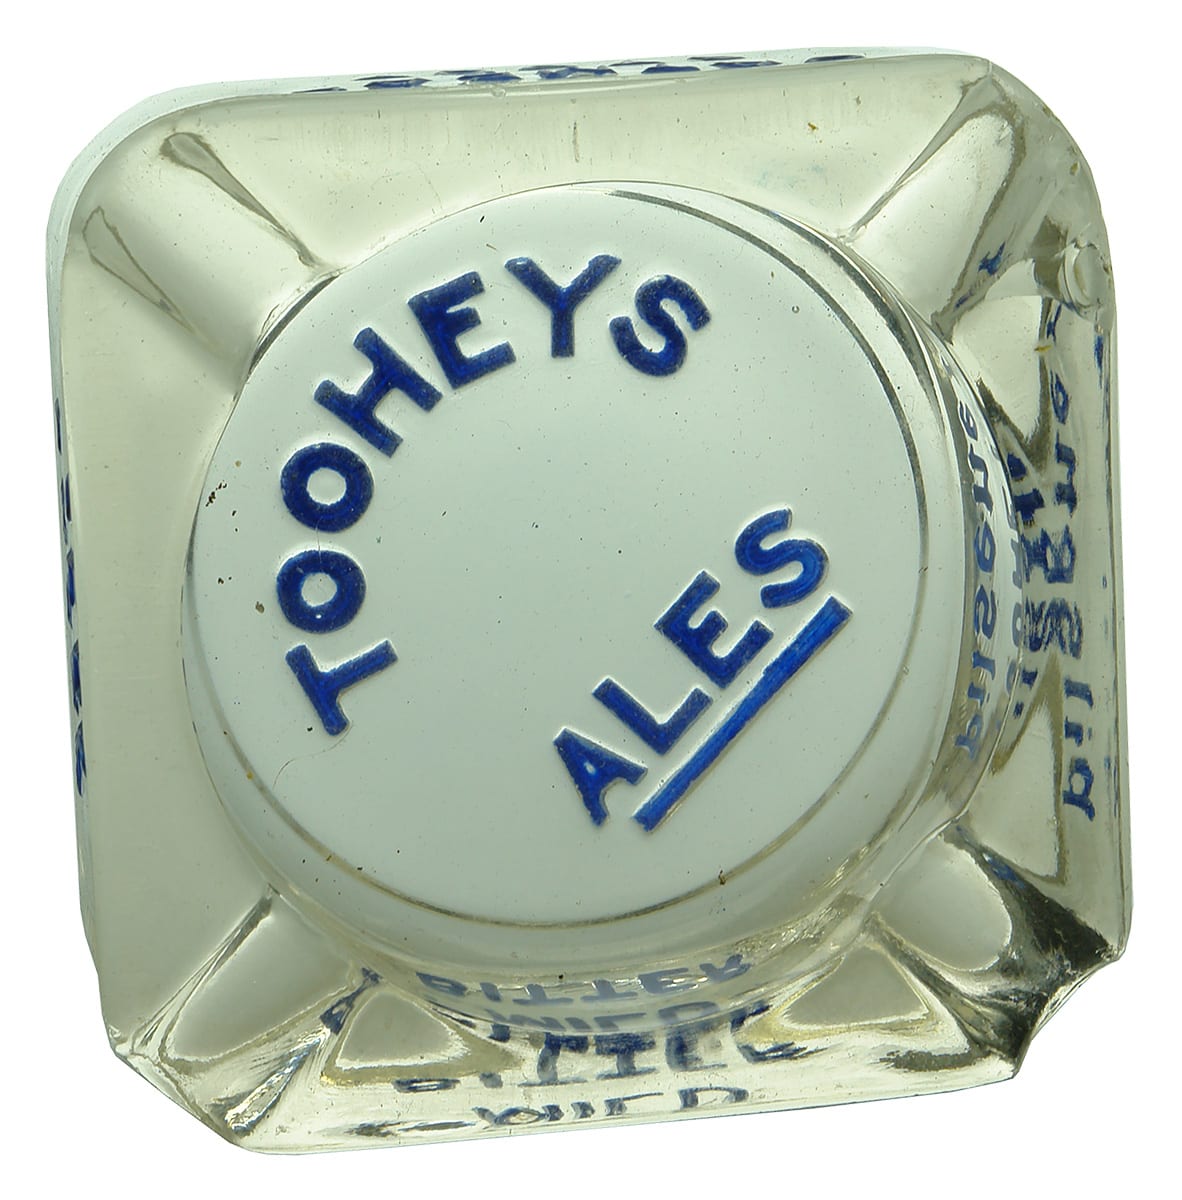 Tooheys Ales Vintage Advertising Ash Tray